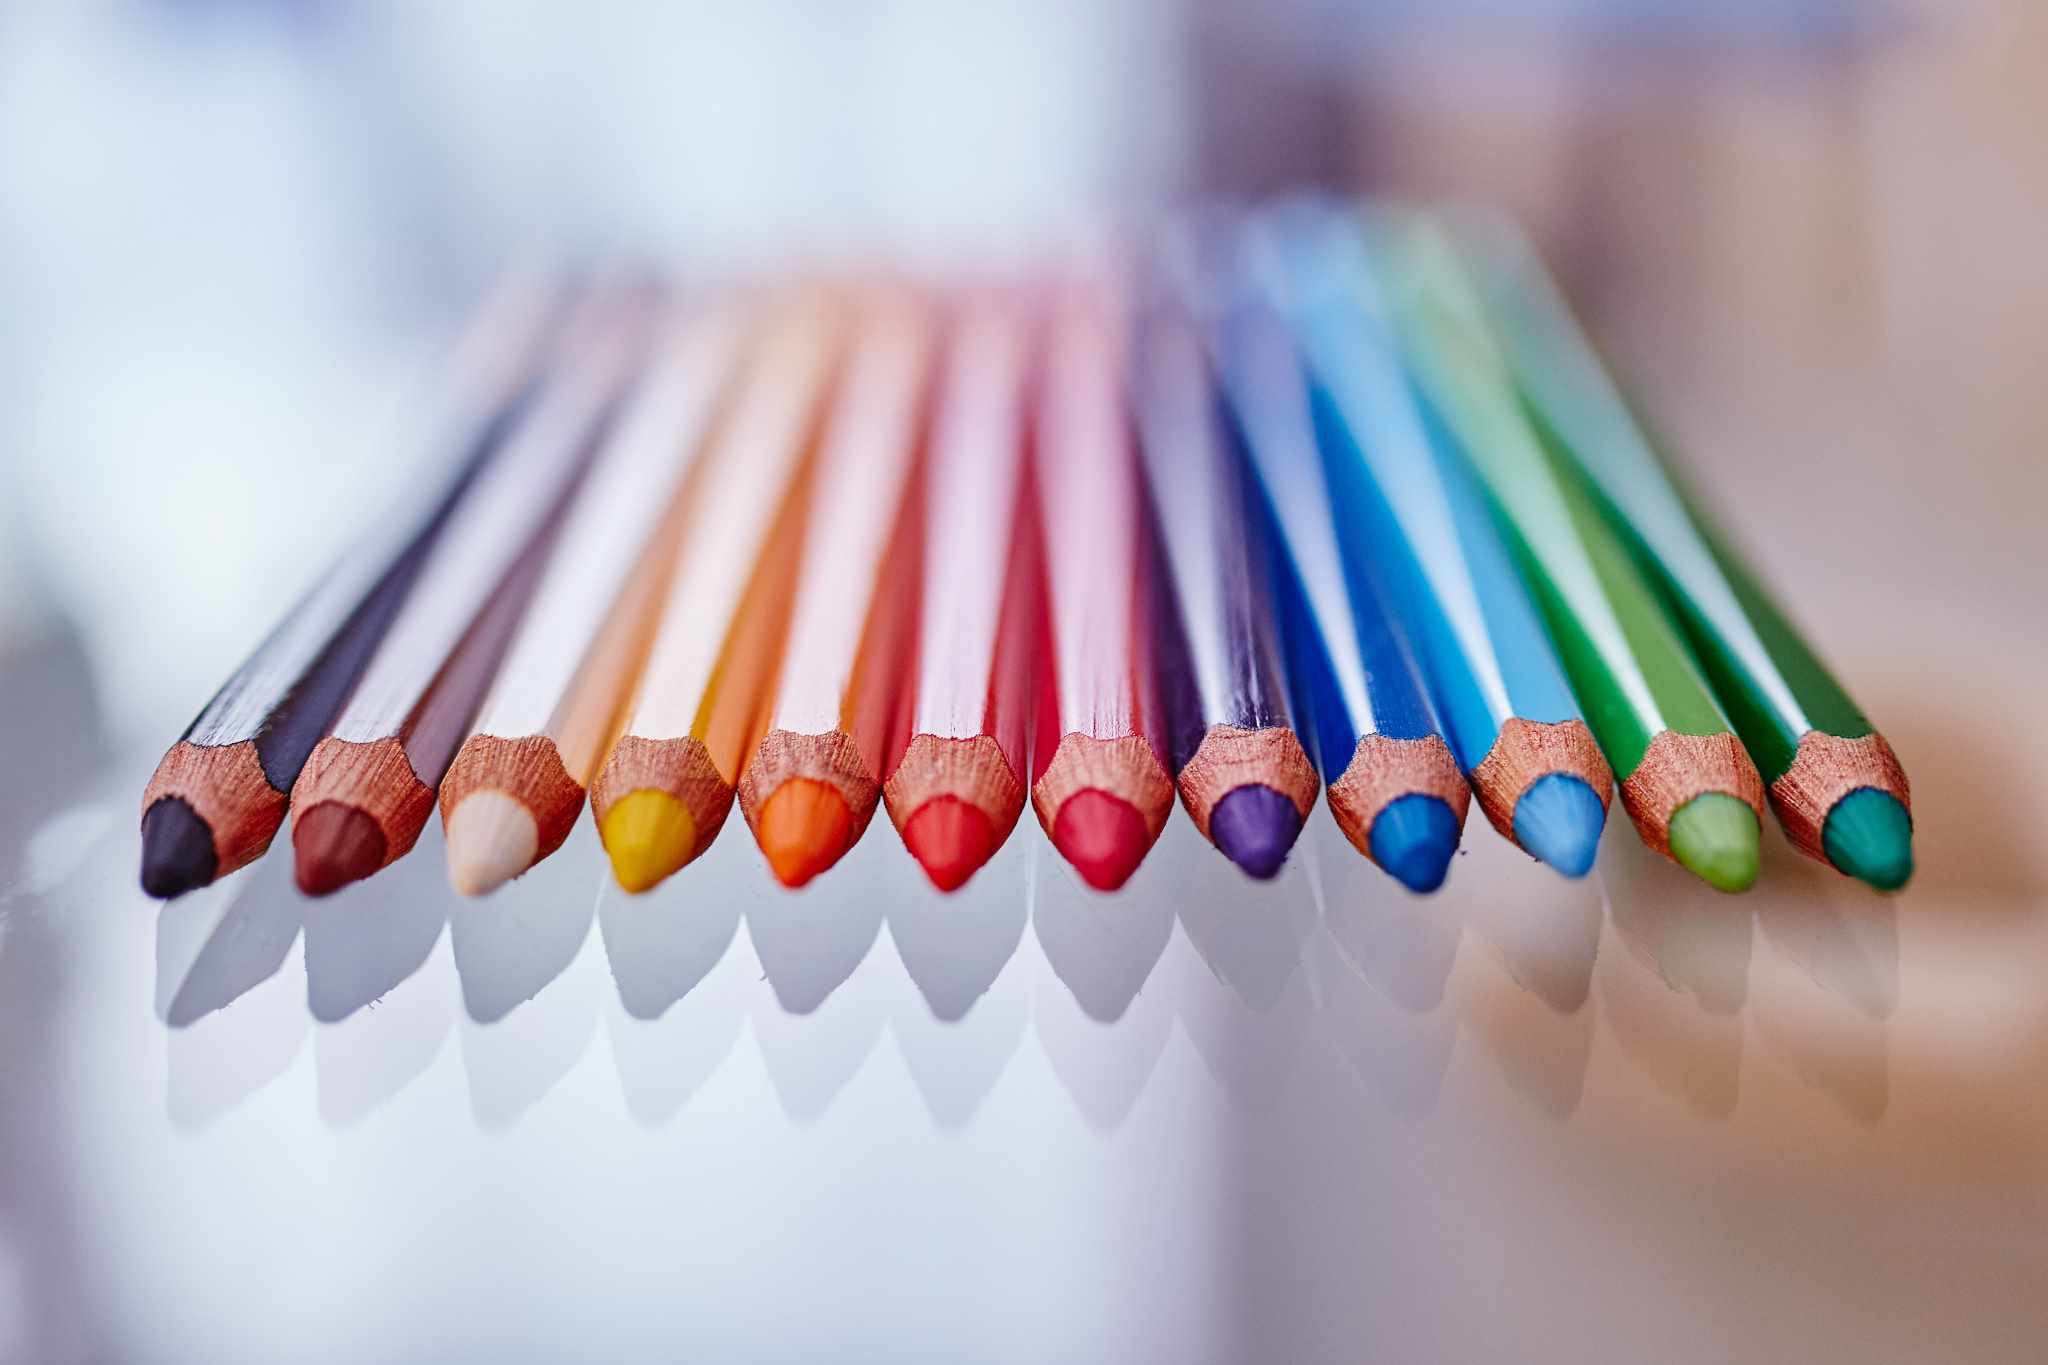 Pencils illustrating diversity in marketing